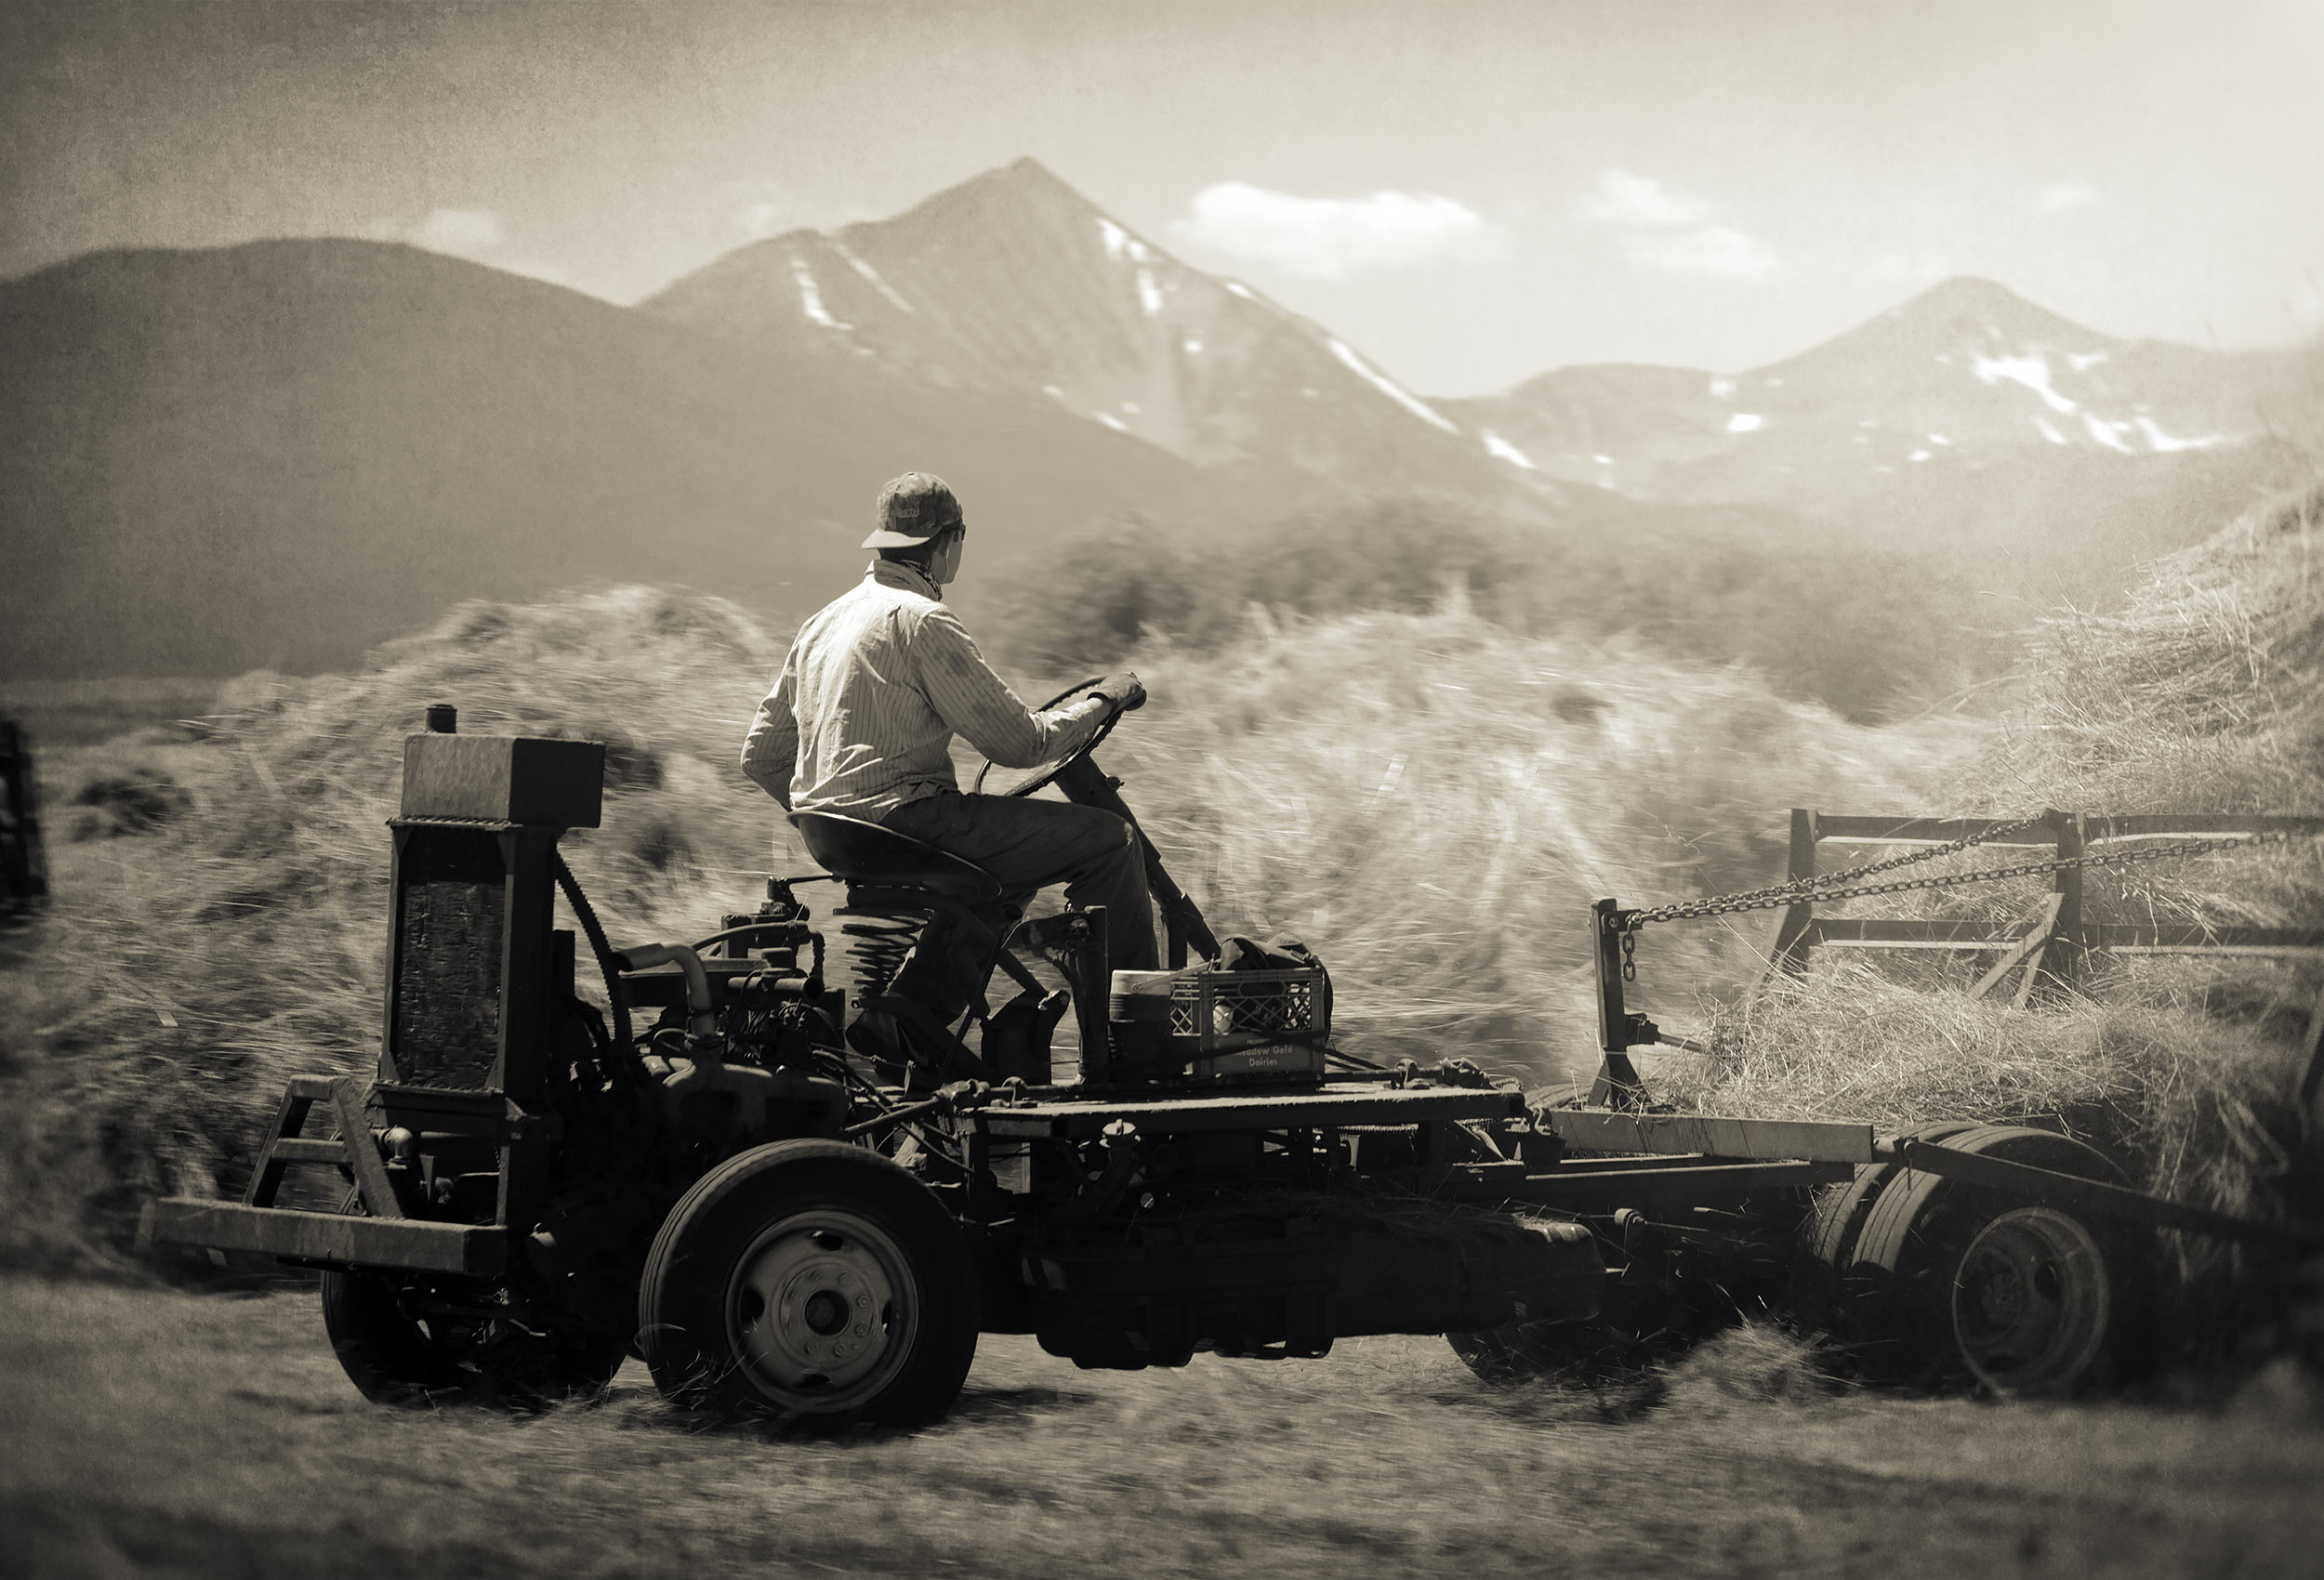 Bucking Hay in Montana